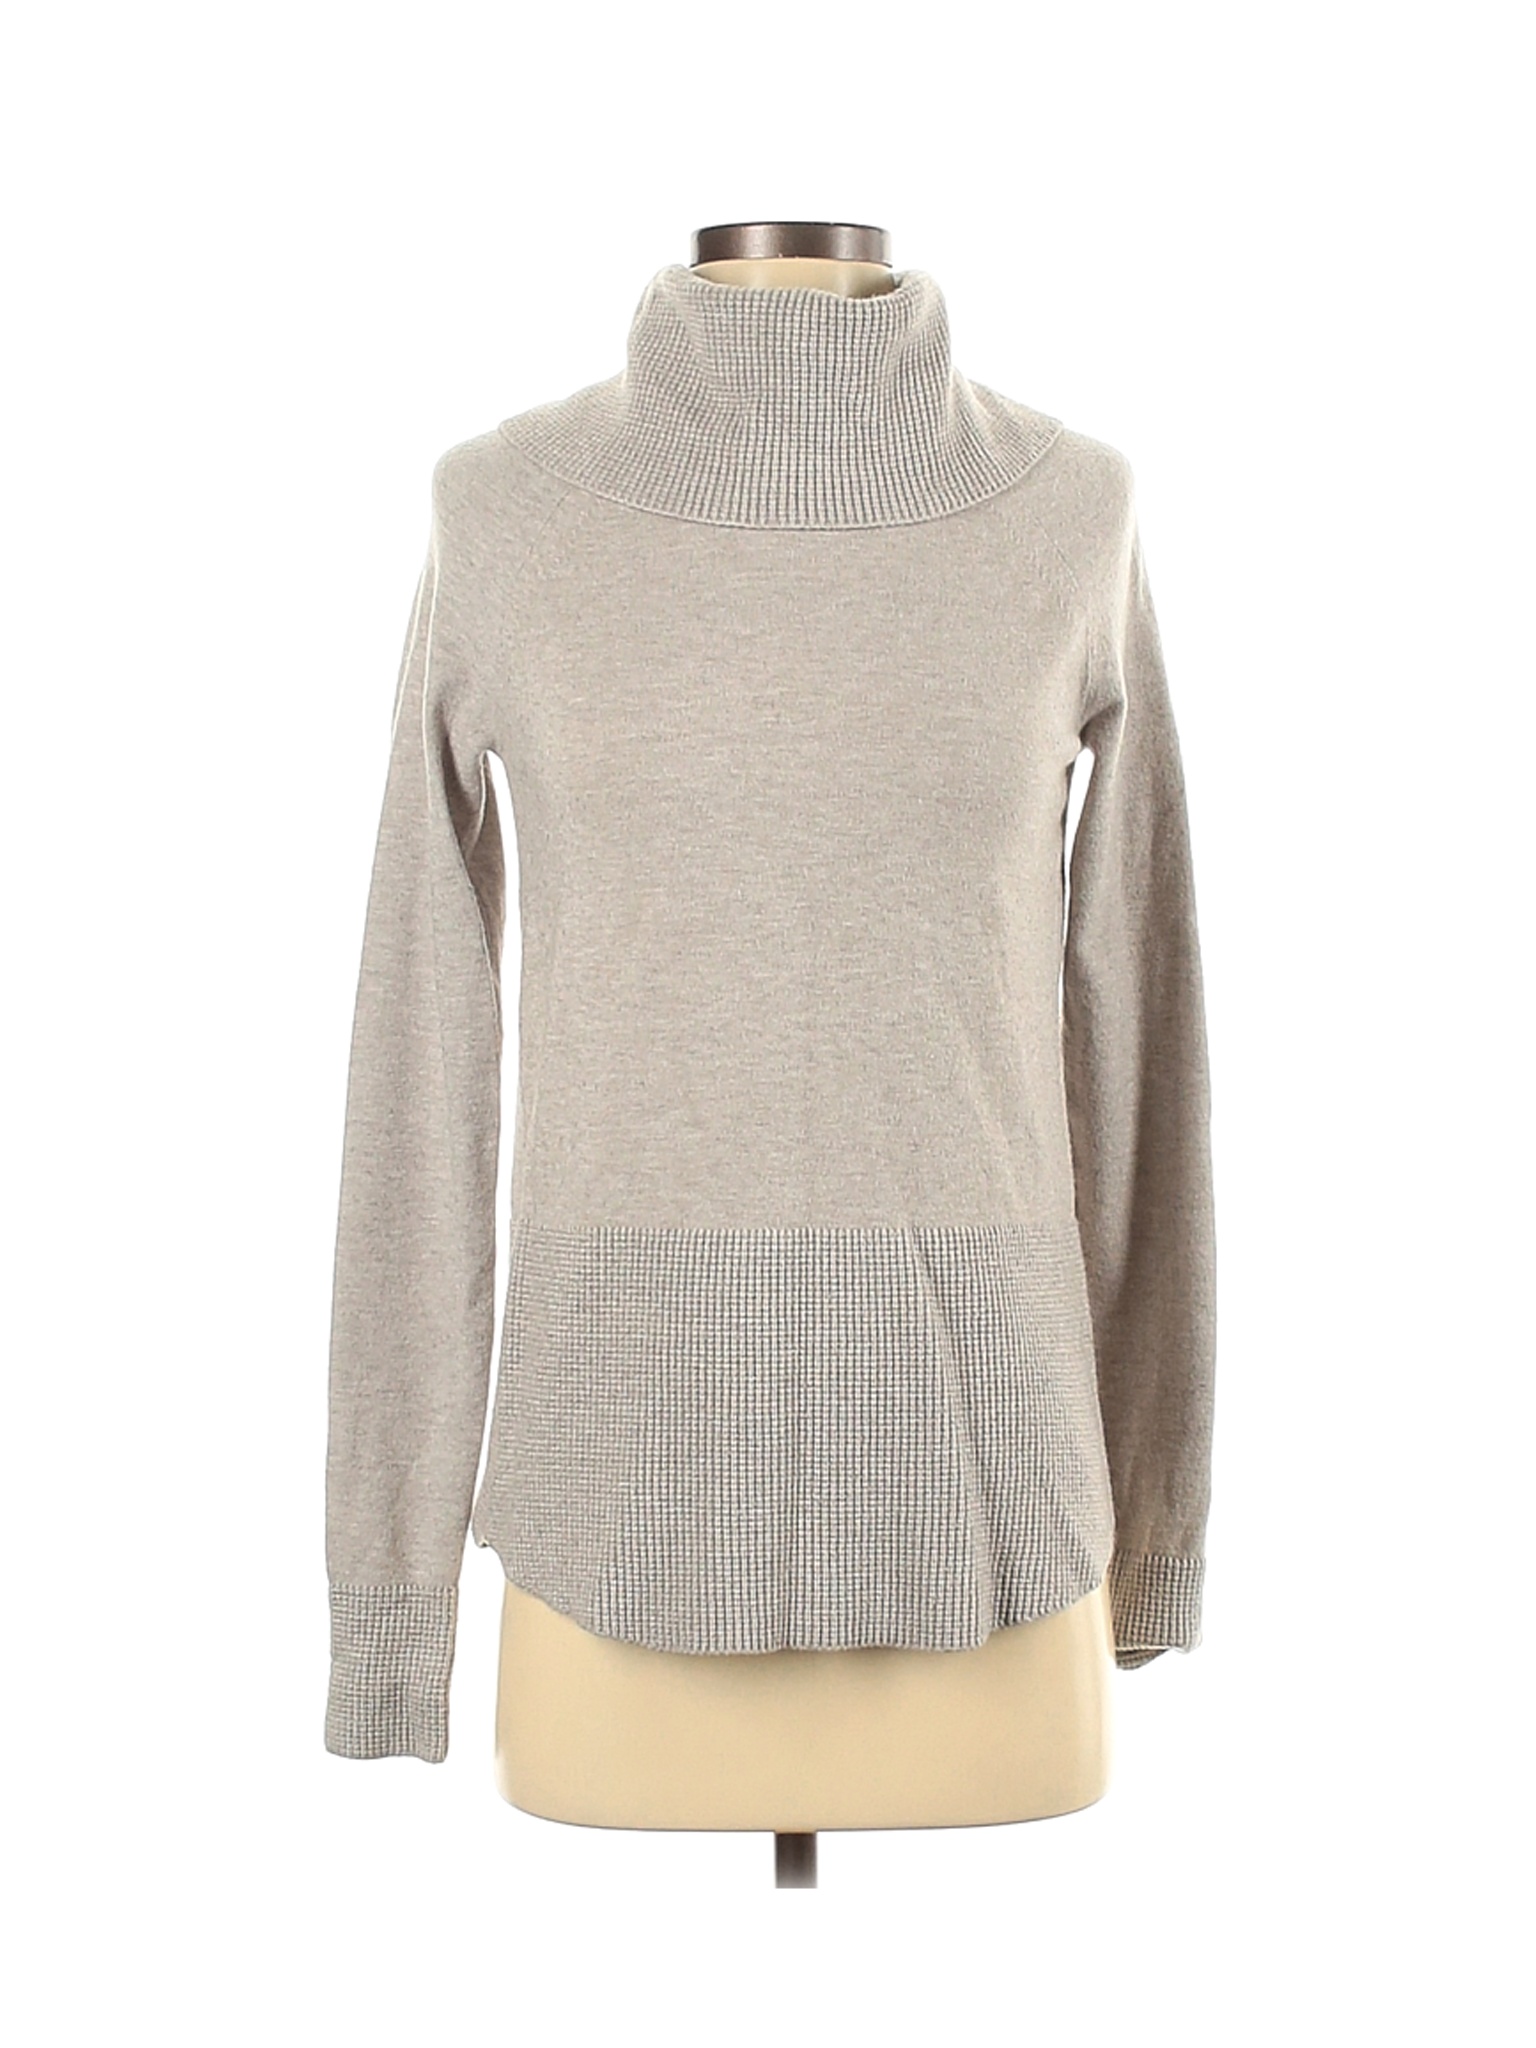 Cyrus Women Gray Pullover Sweater S | eBay